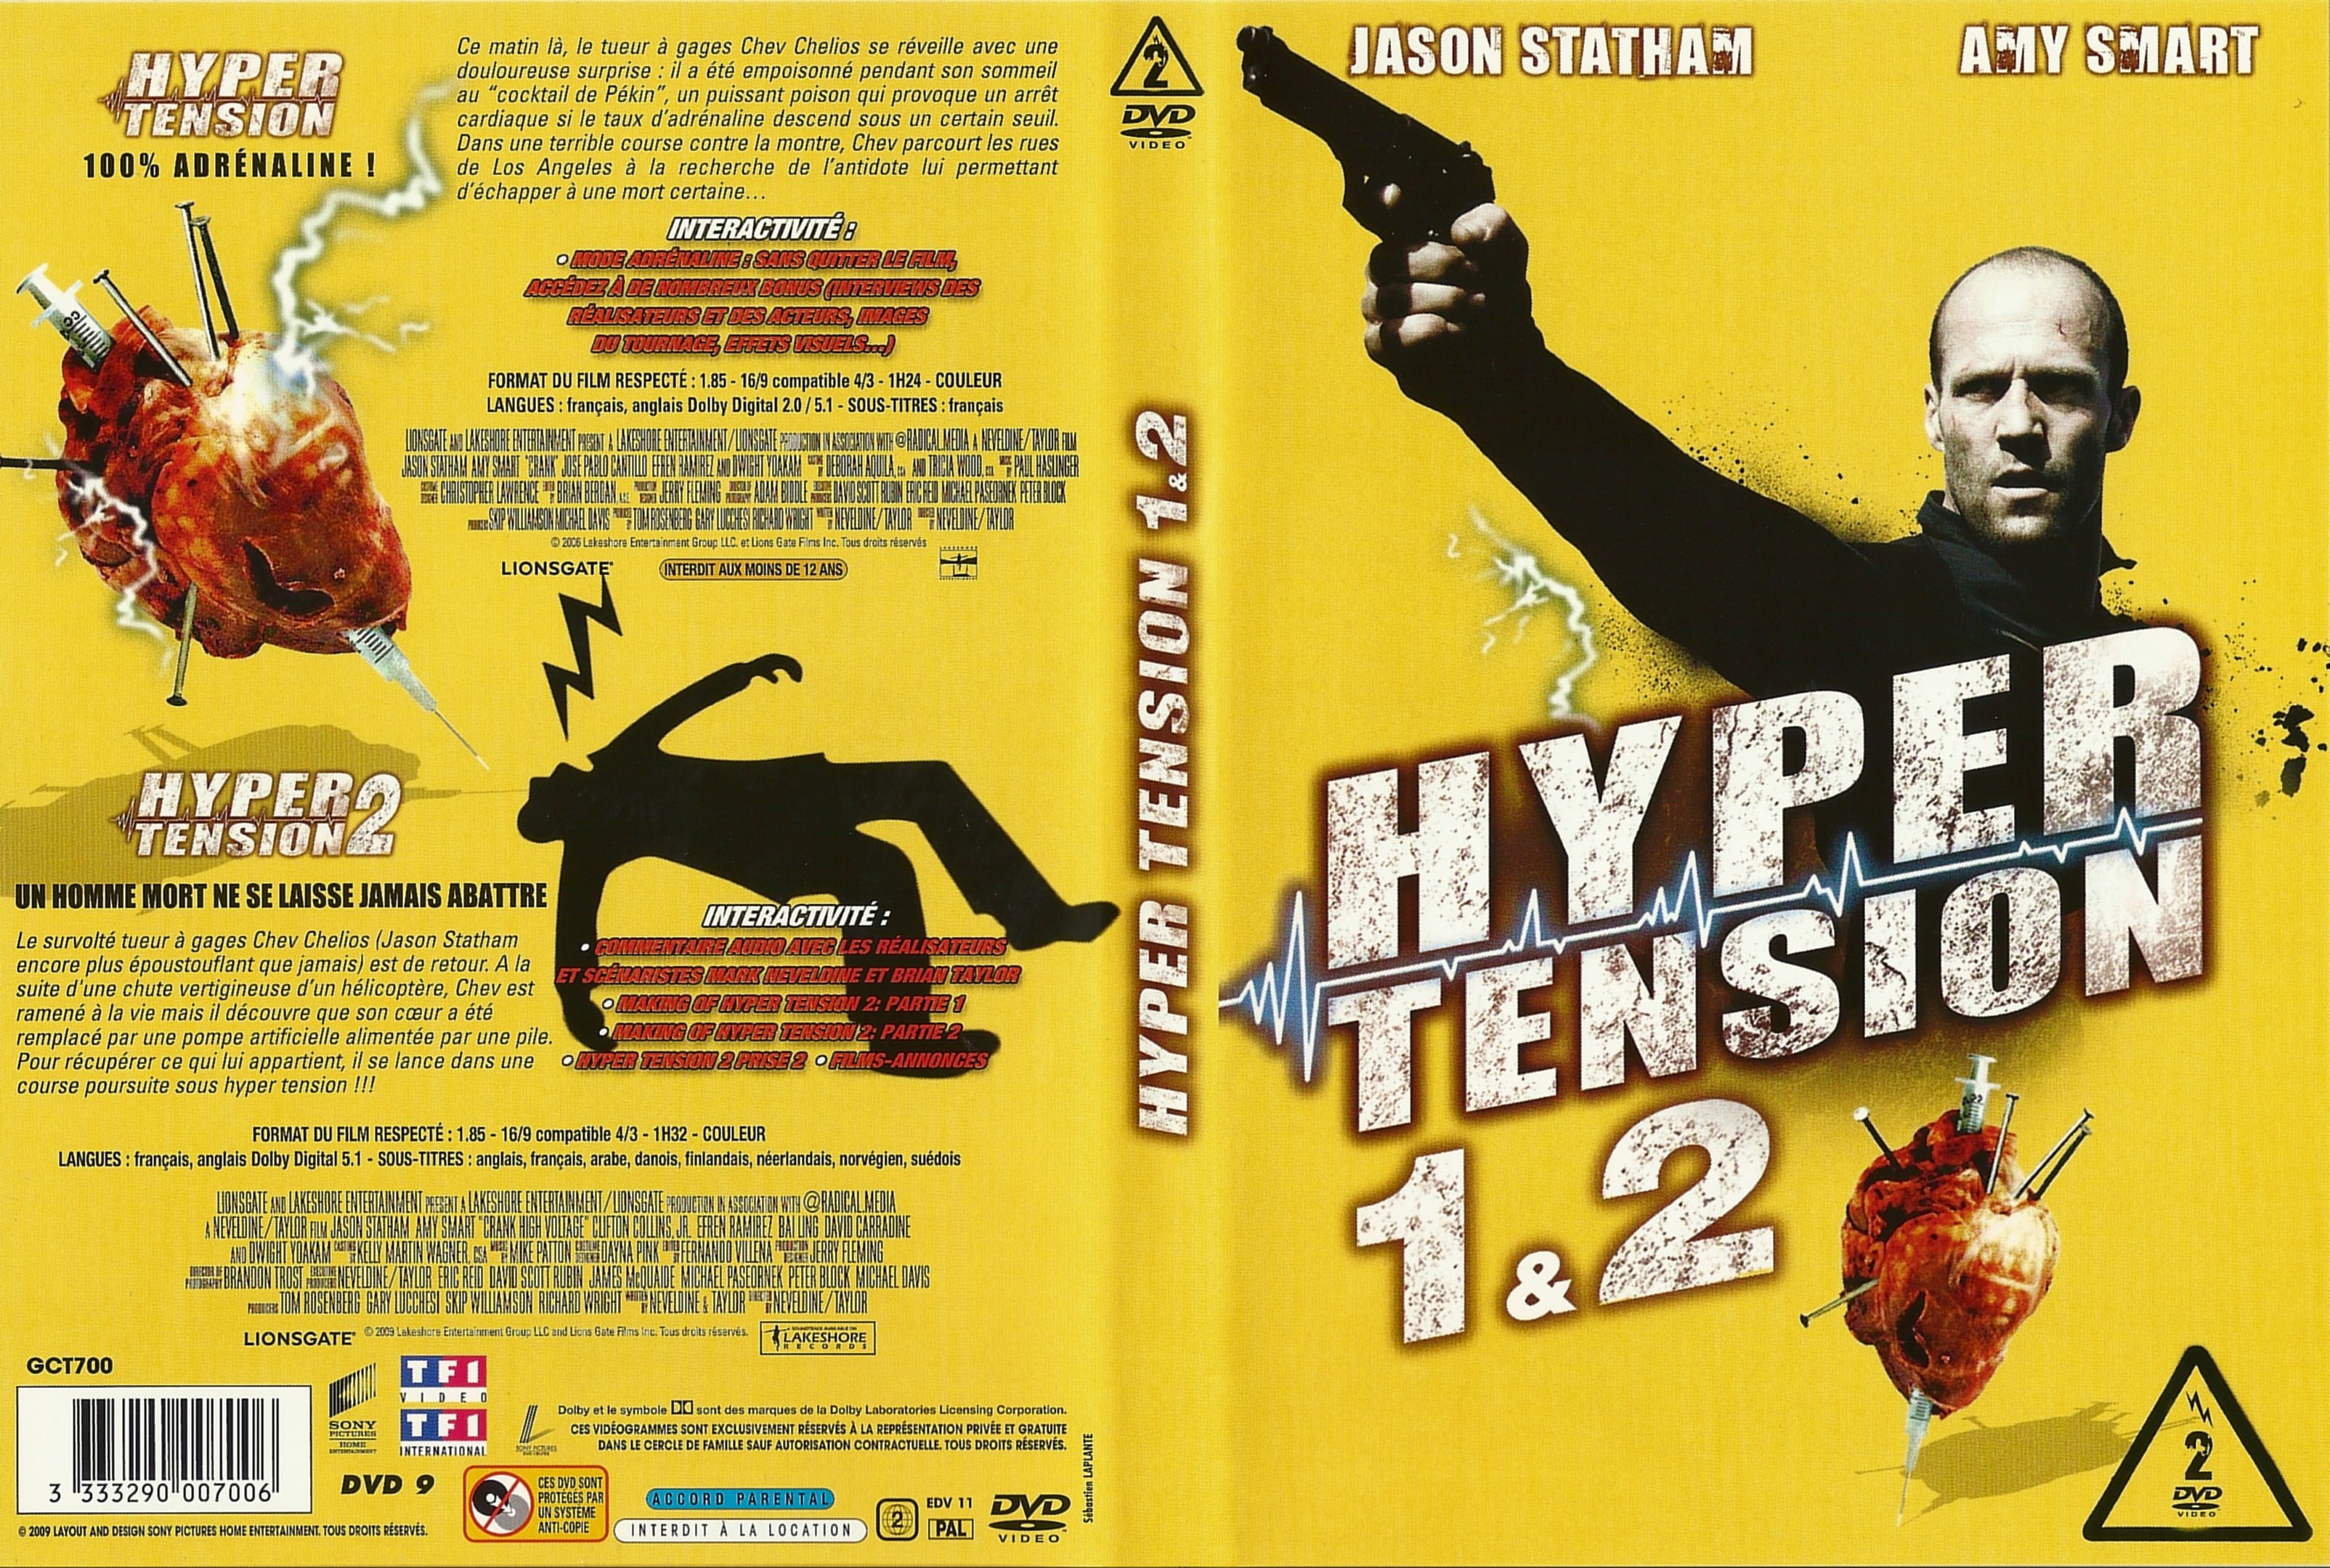 Jaquette DVD Hyper tension 1 & 2